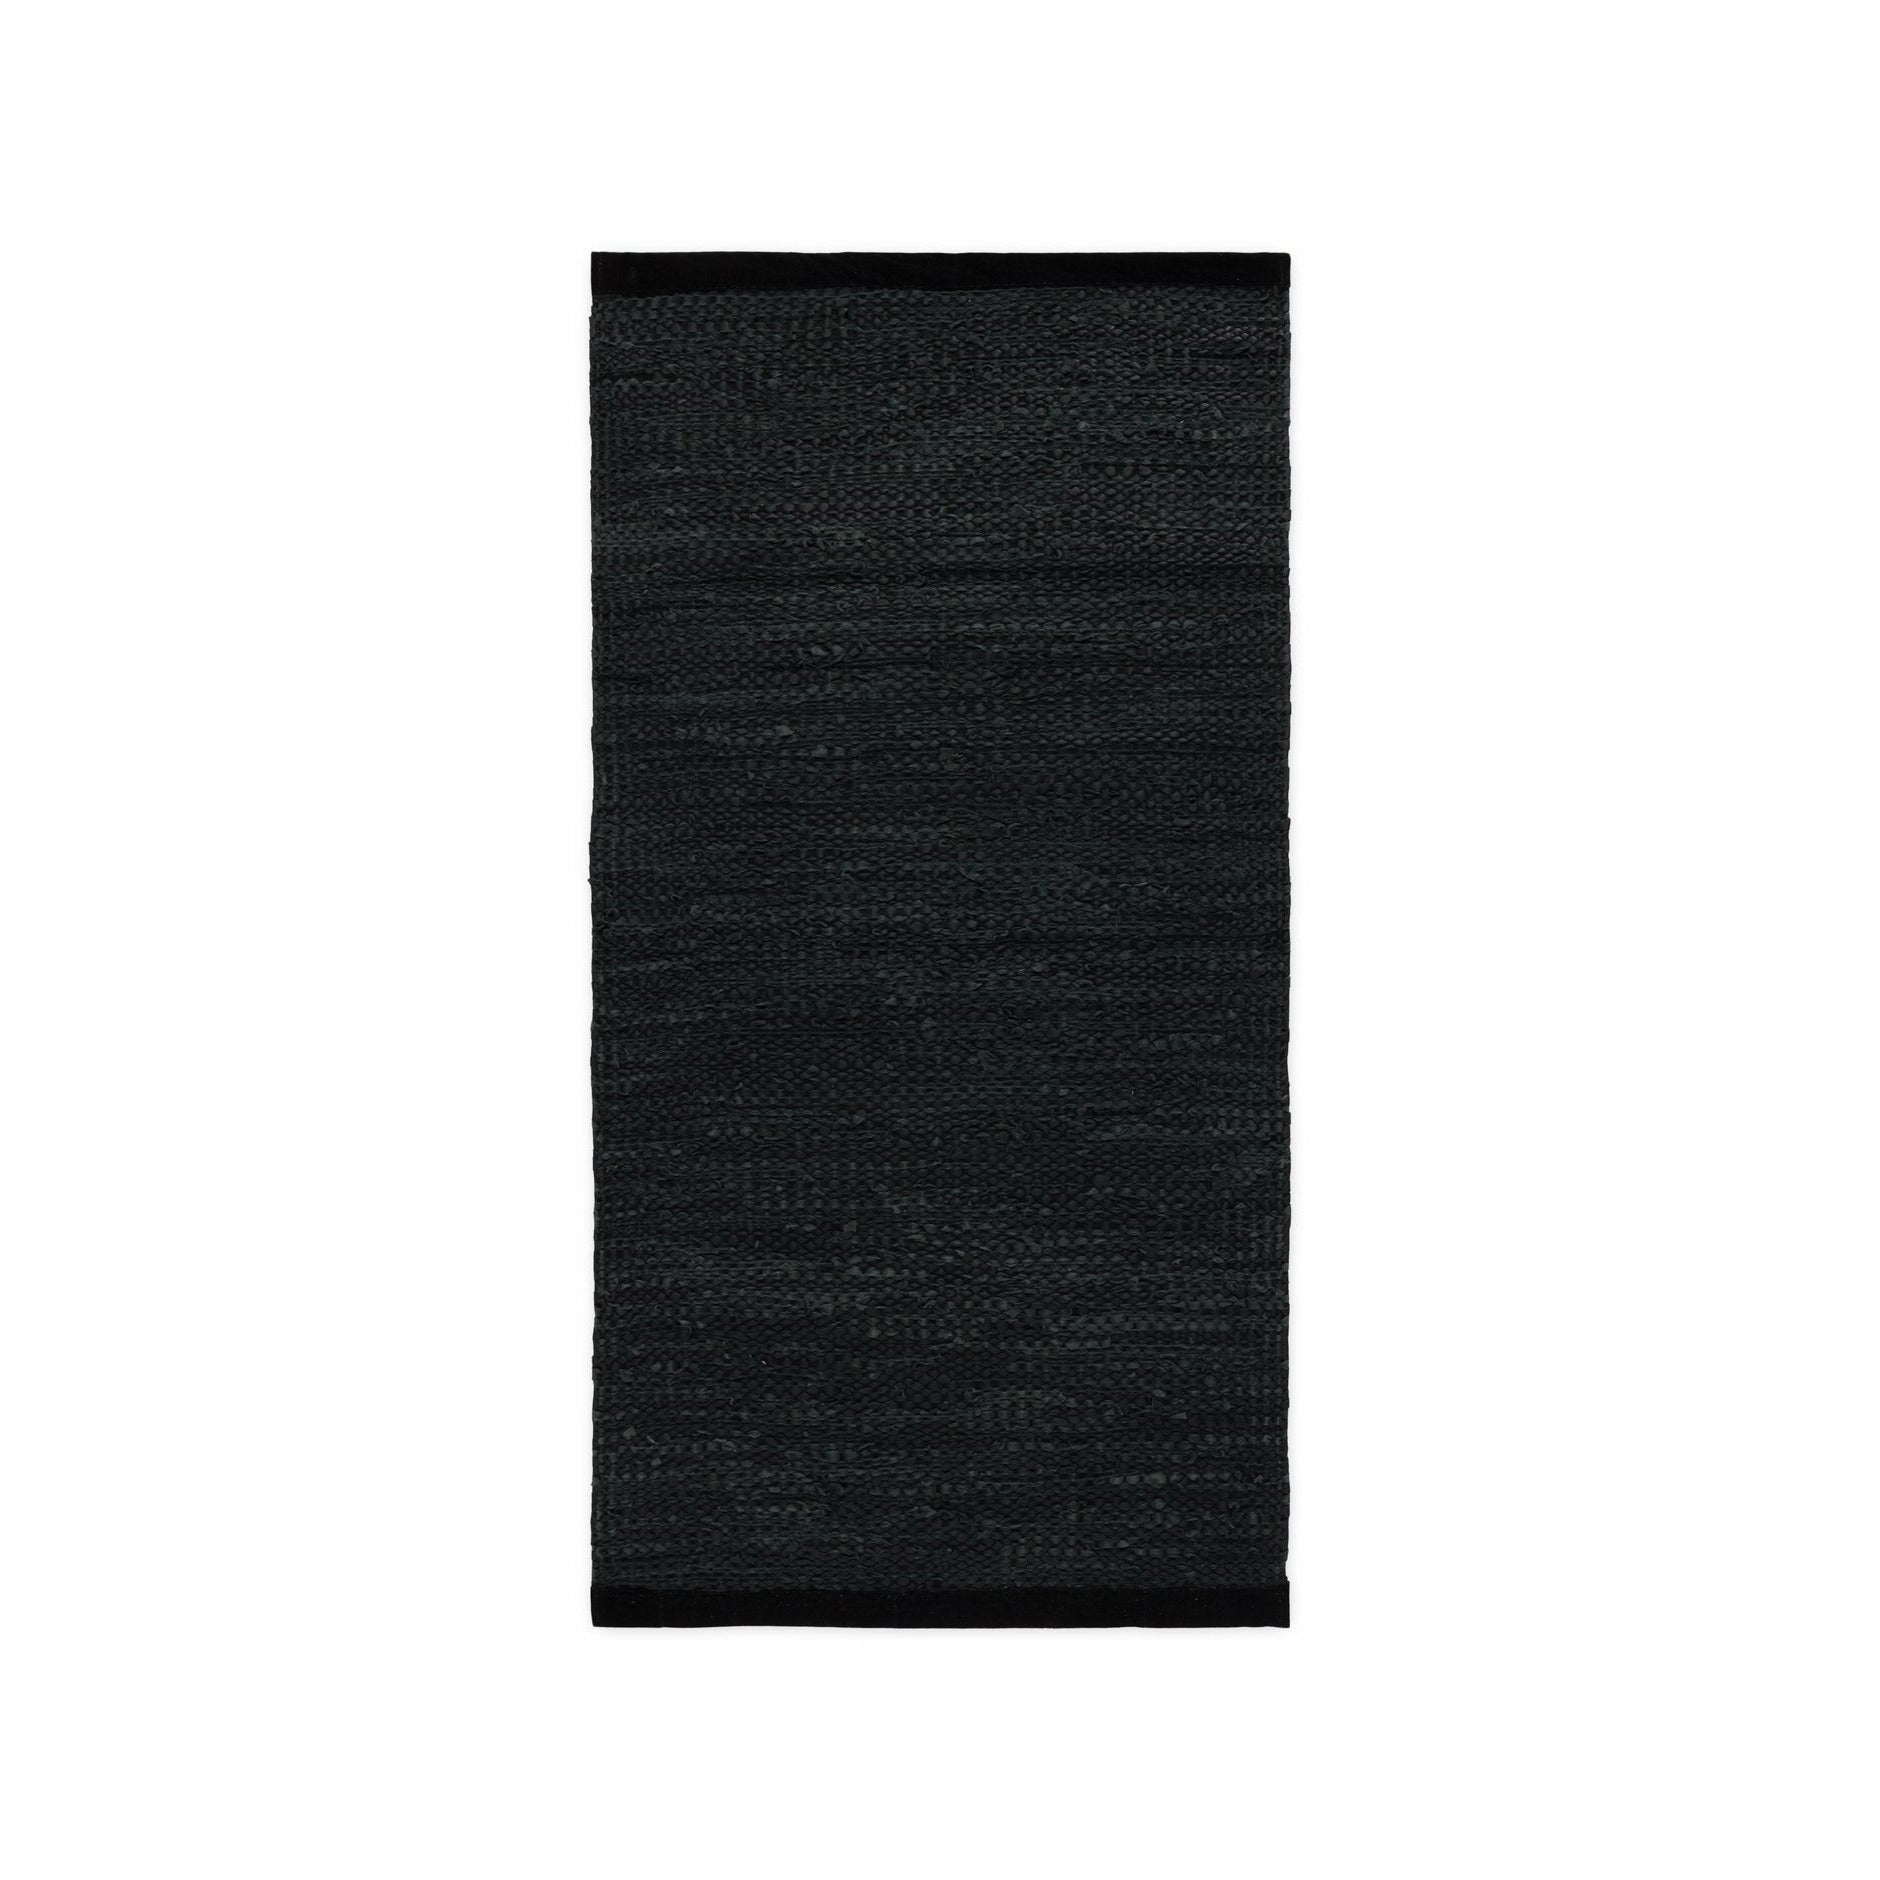 Tappeto in pelle solida nera, 65 x 135 cm